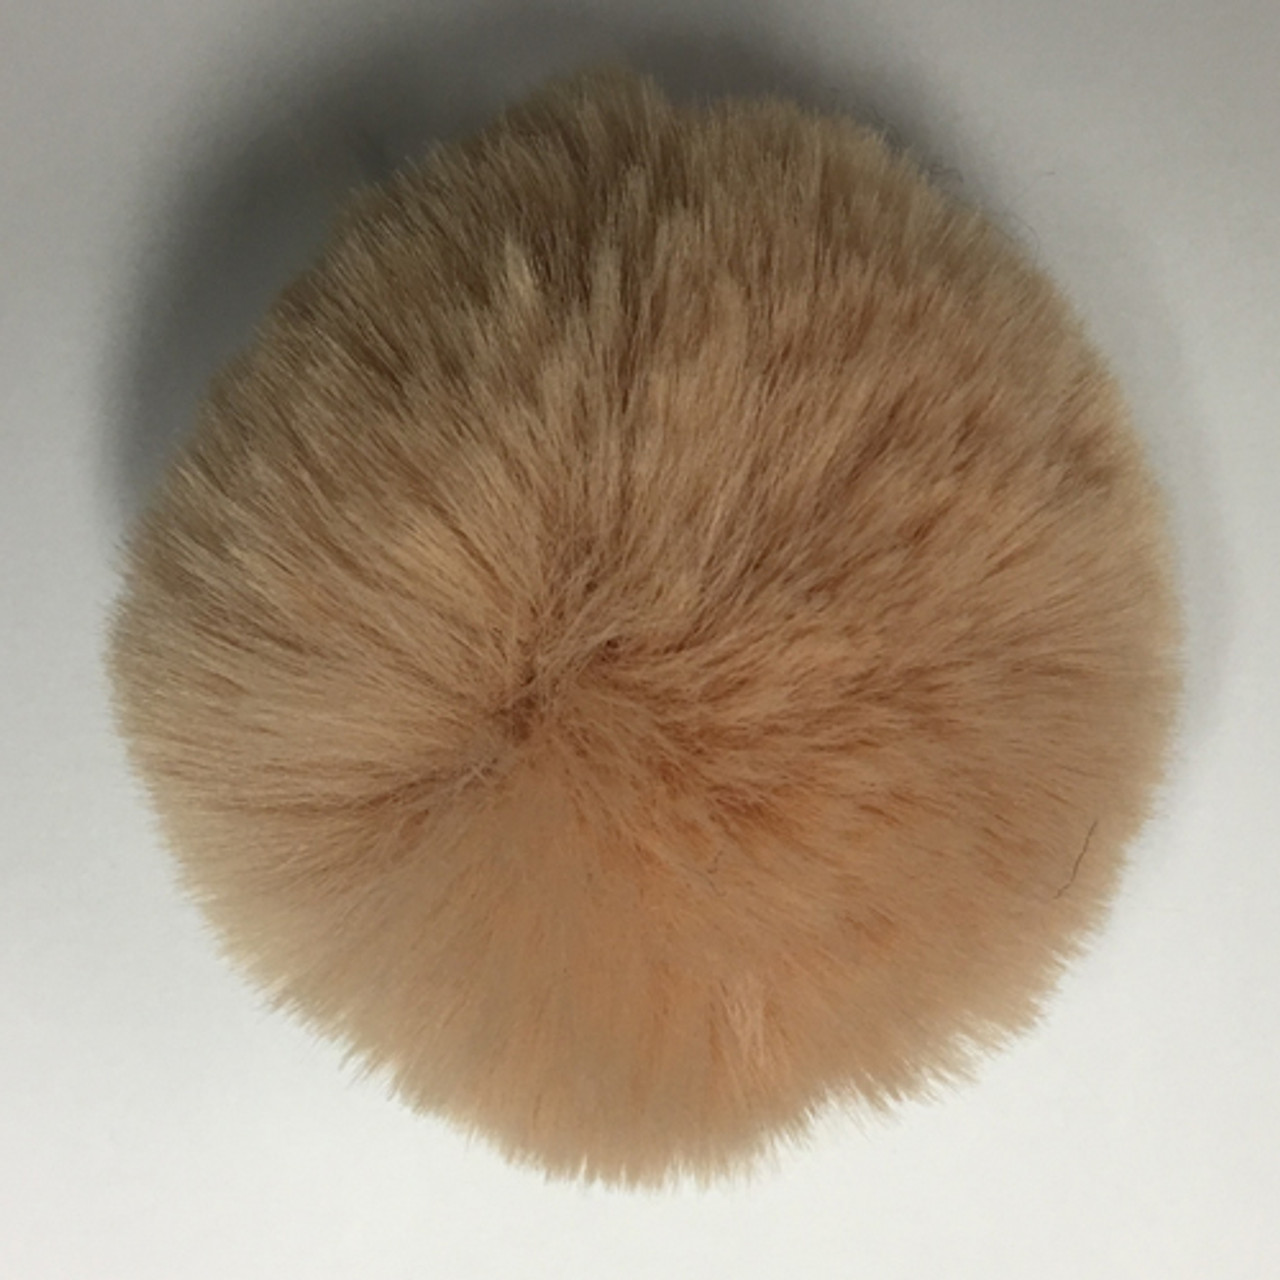 Natural Genuine Rabbit Fur Pom Pom Ball 3.5” – 4” Inches